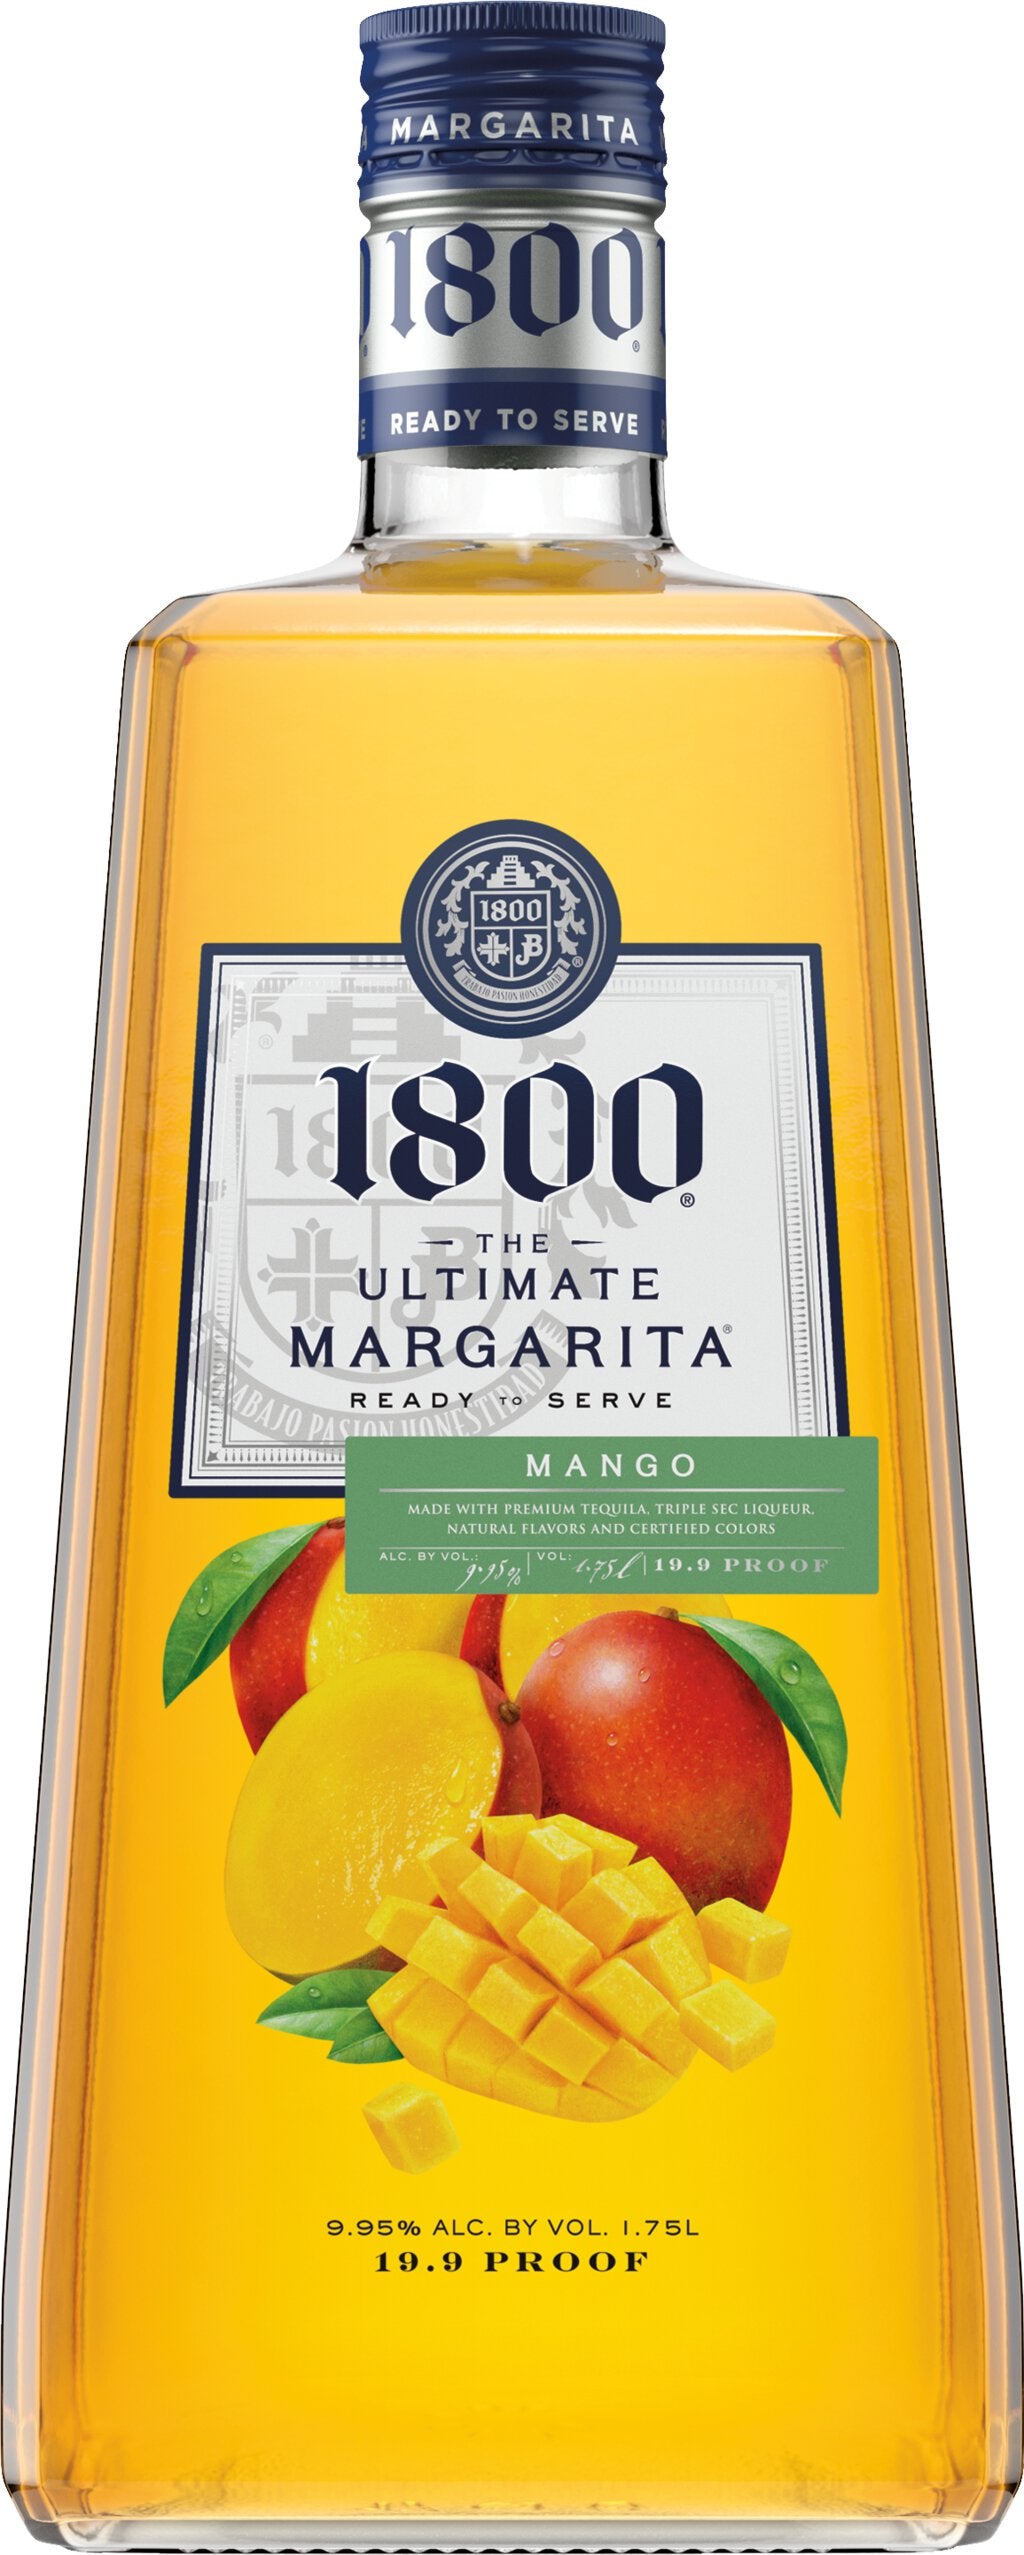 1800 The Ultimate Mango Margarita